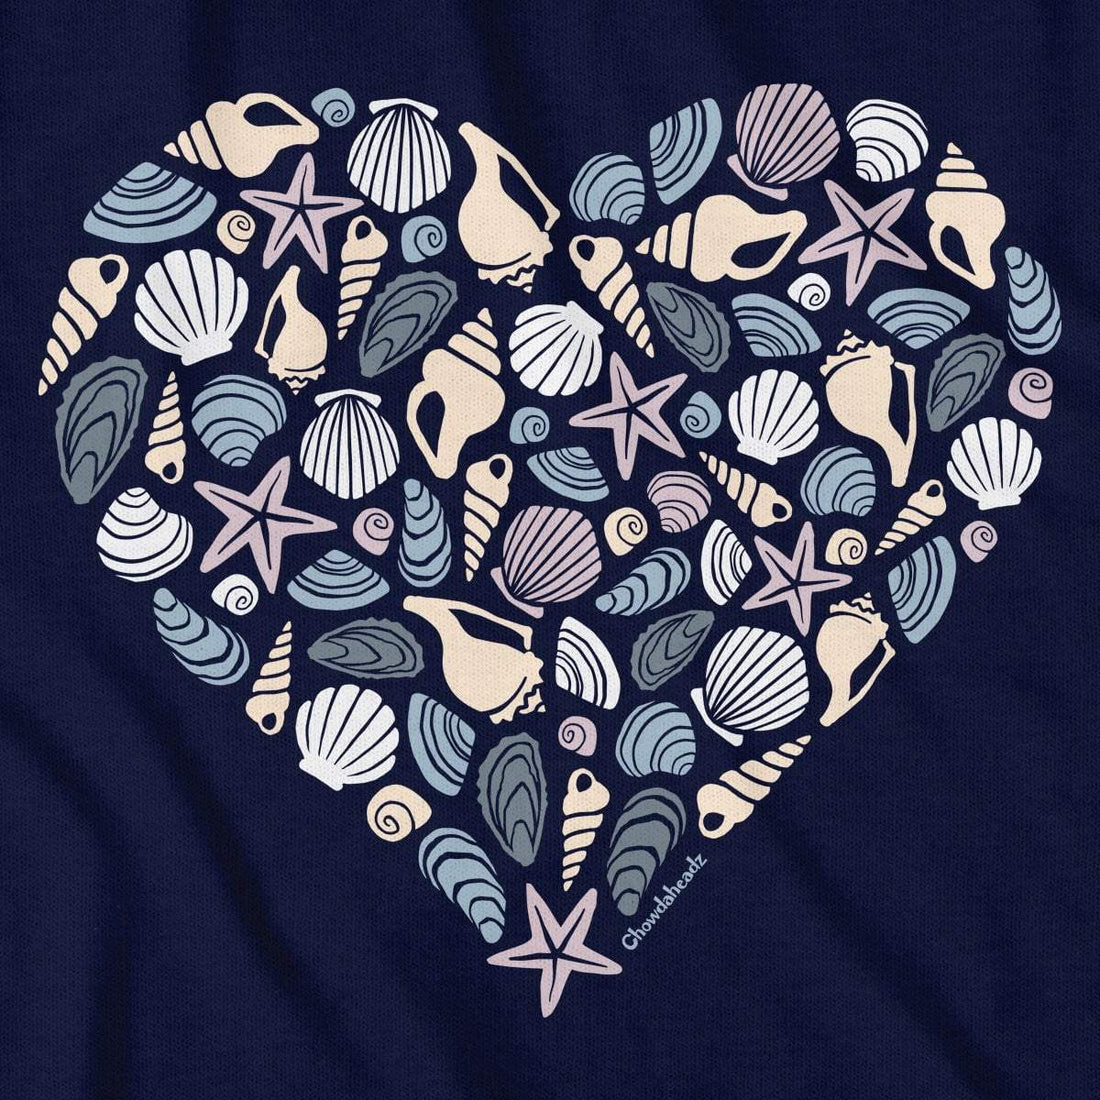 Seashell Heart T-Shirt - Chowdaheadz